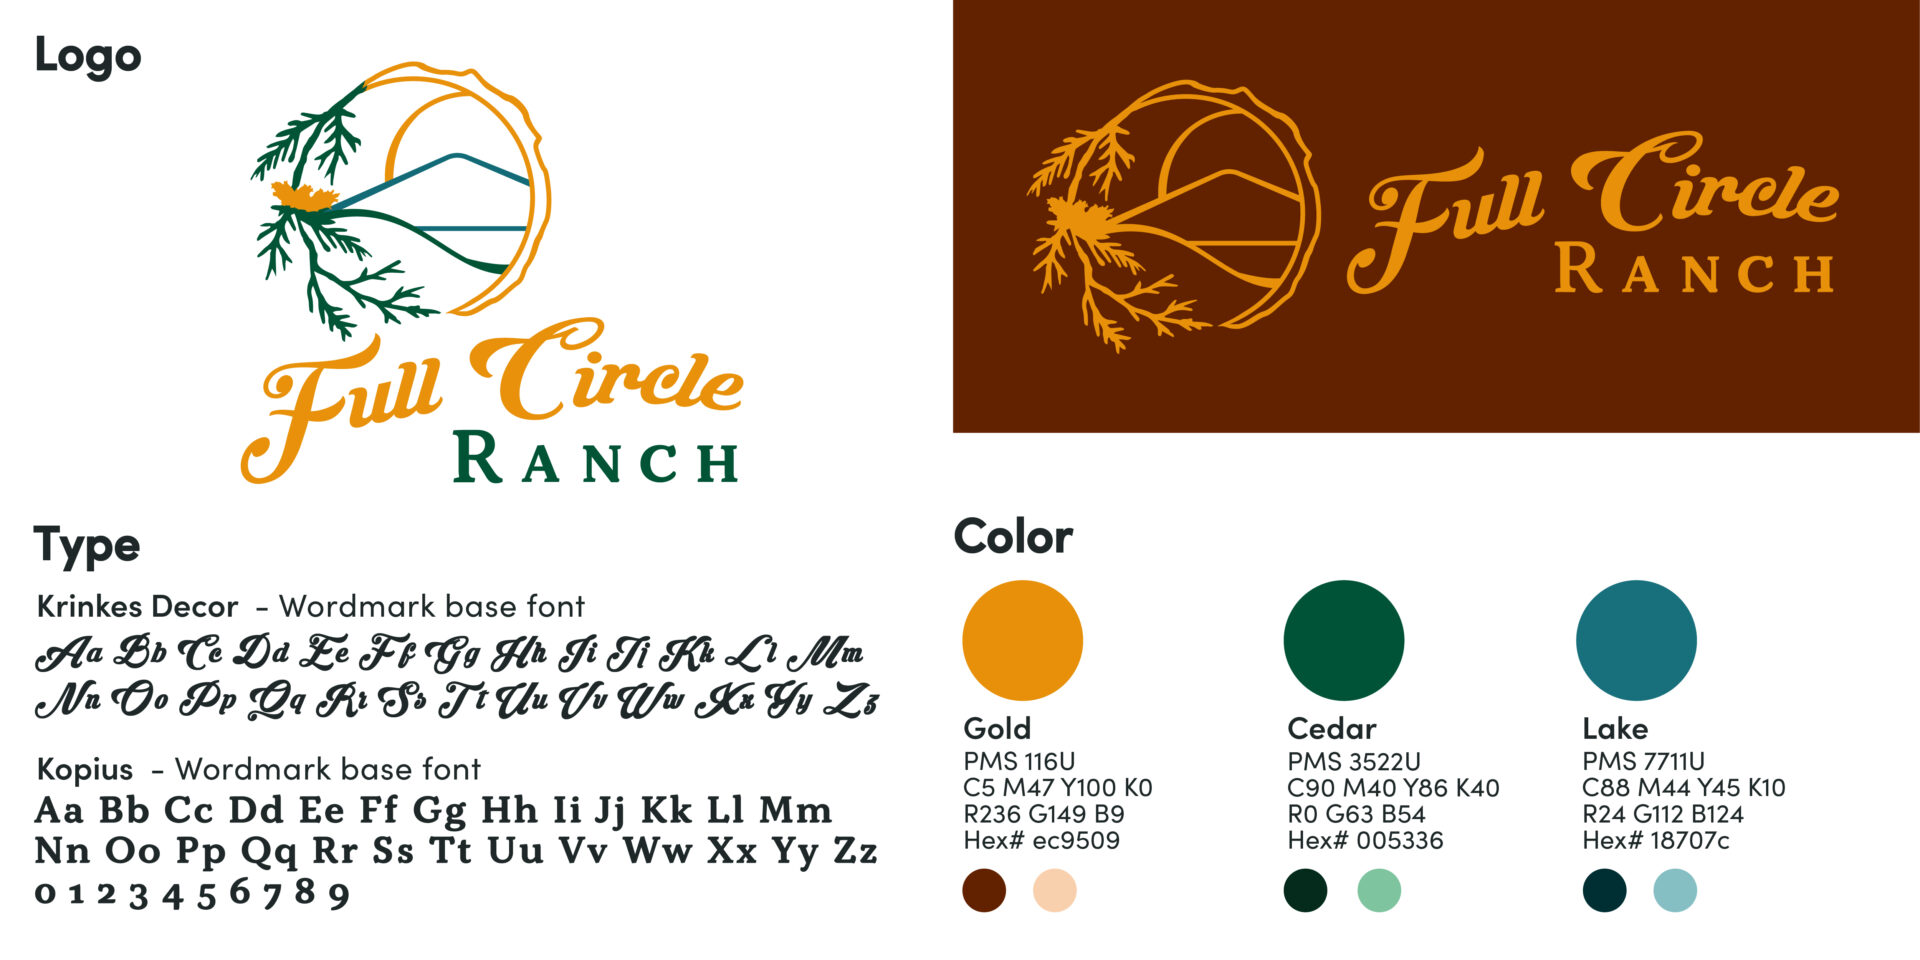 Full Circle Ranch final logo solution